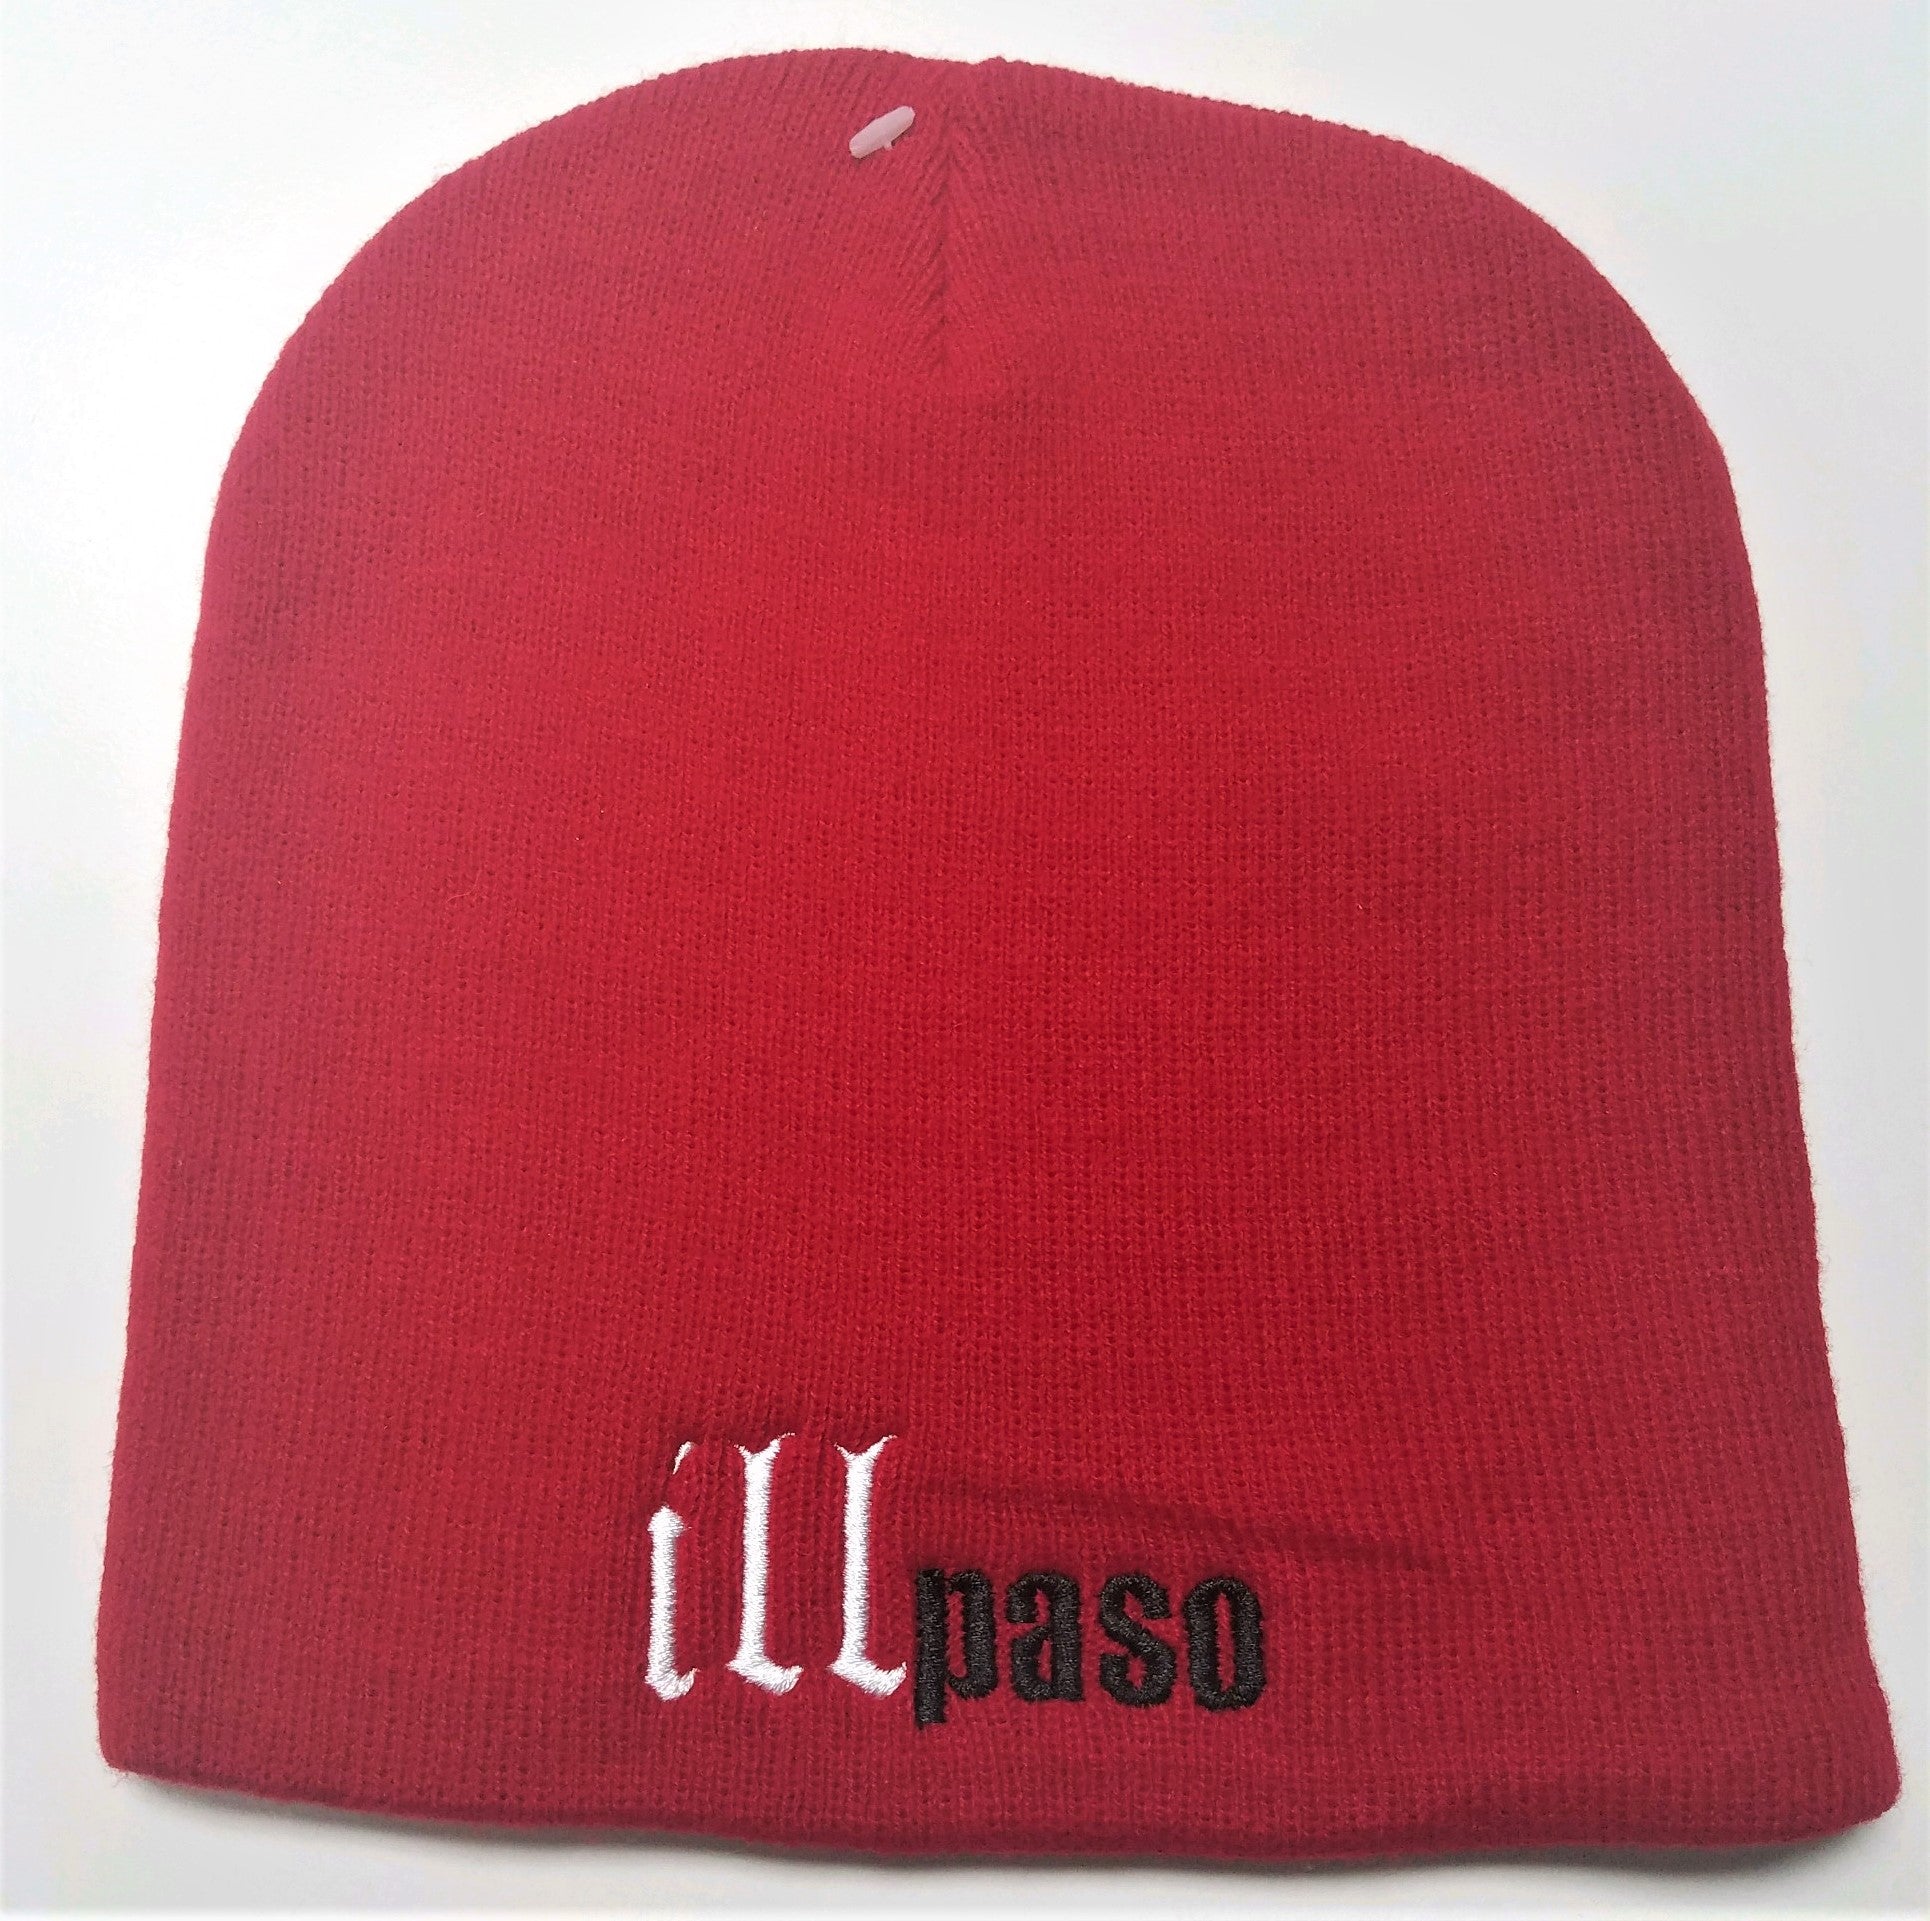 "illmatic Tribute" Skullie Cap (Red) by illpaso